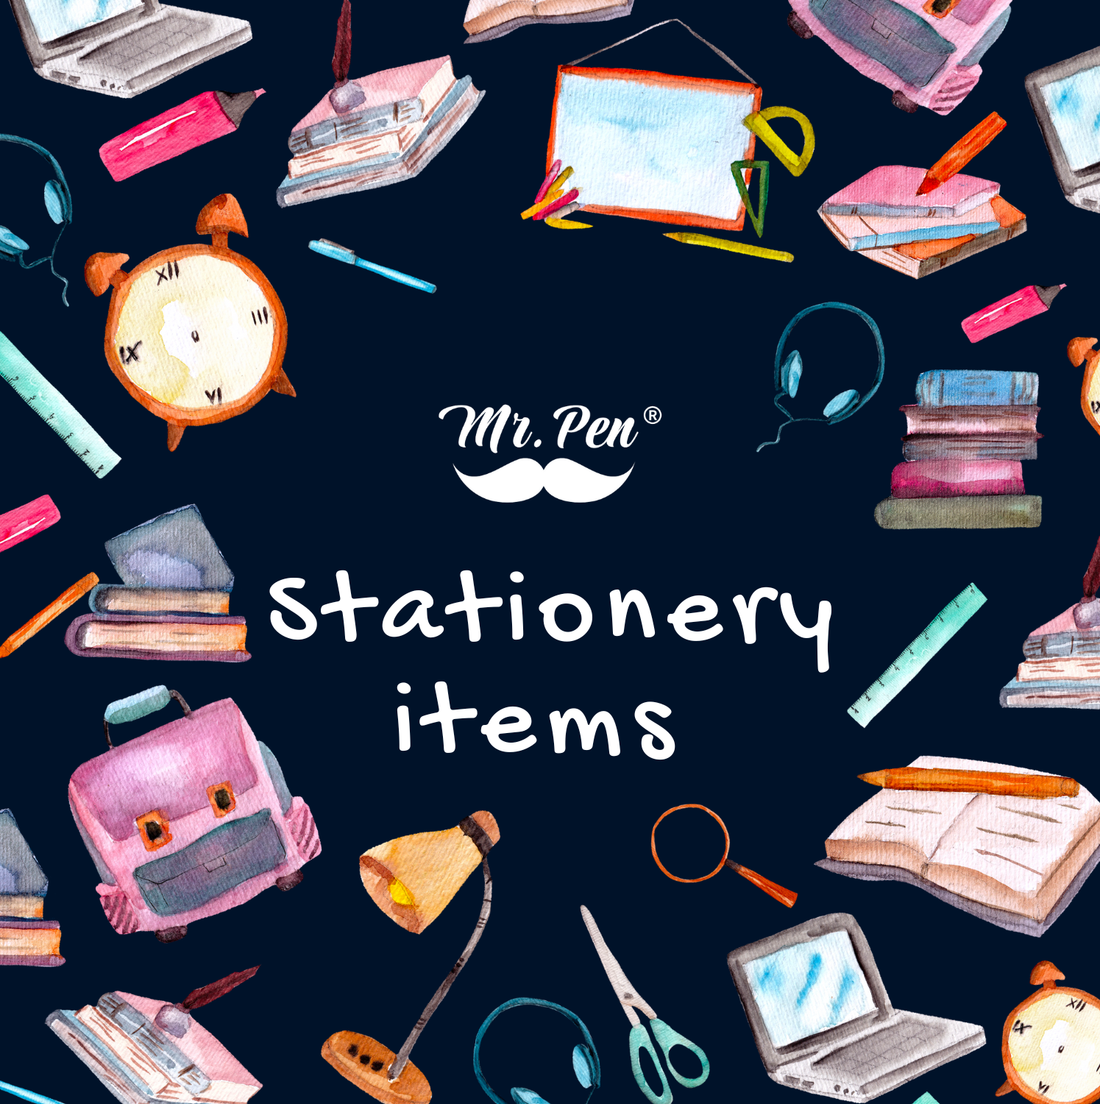 Stationery-items